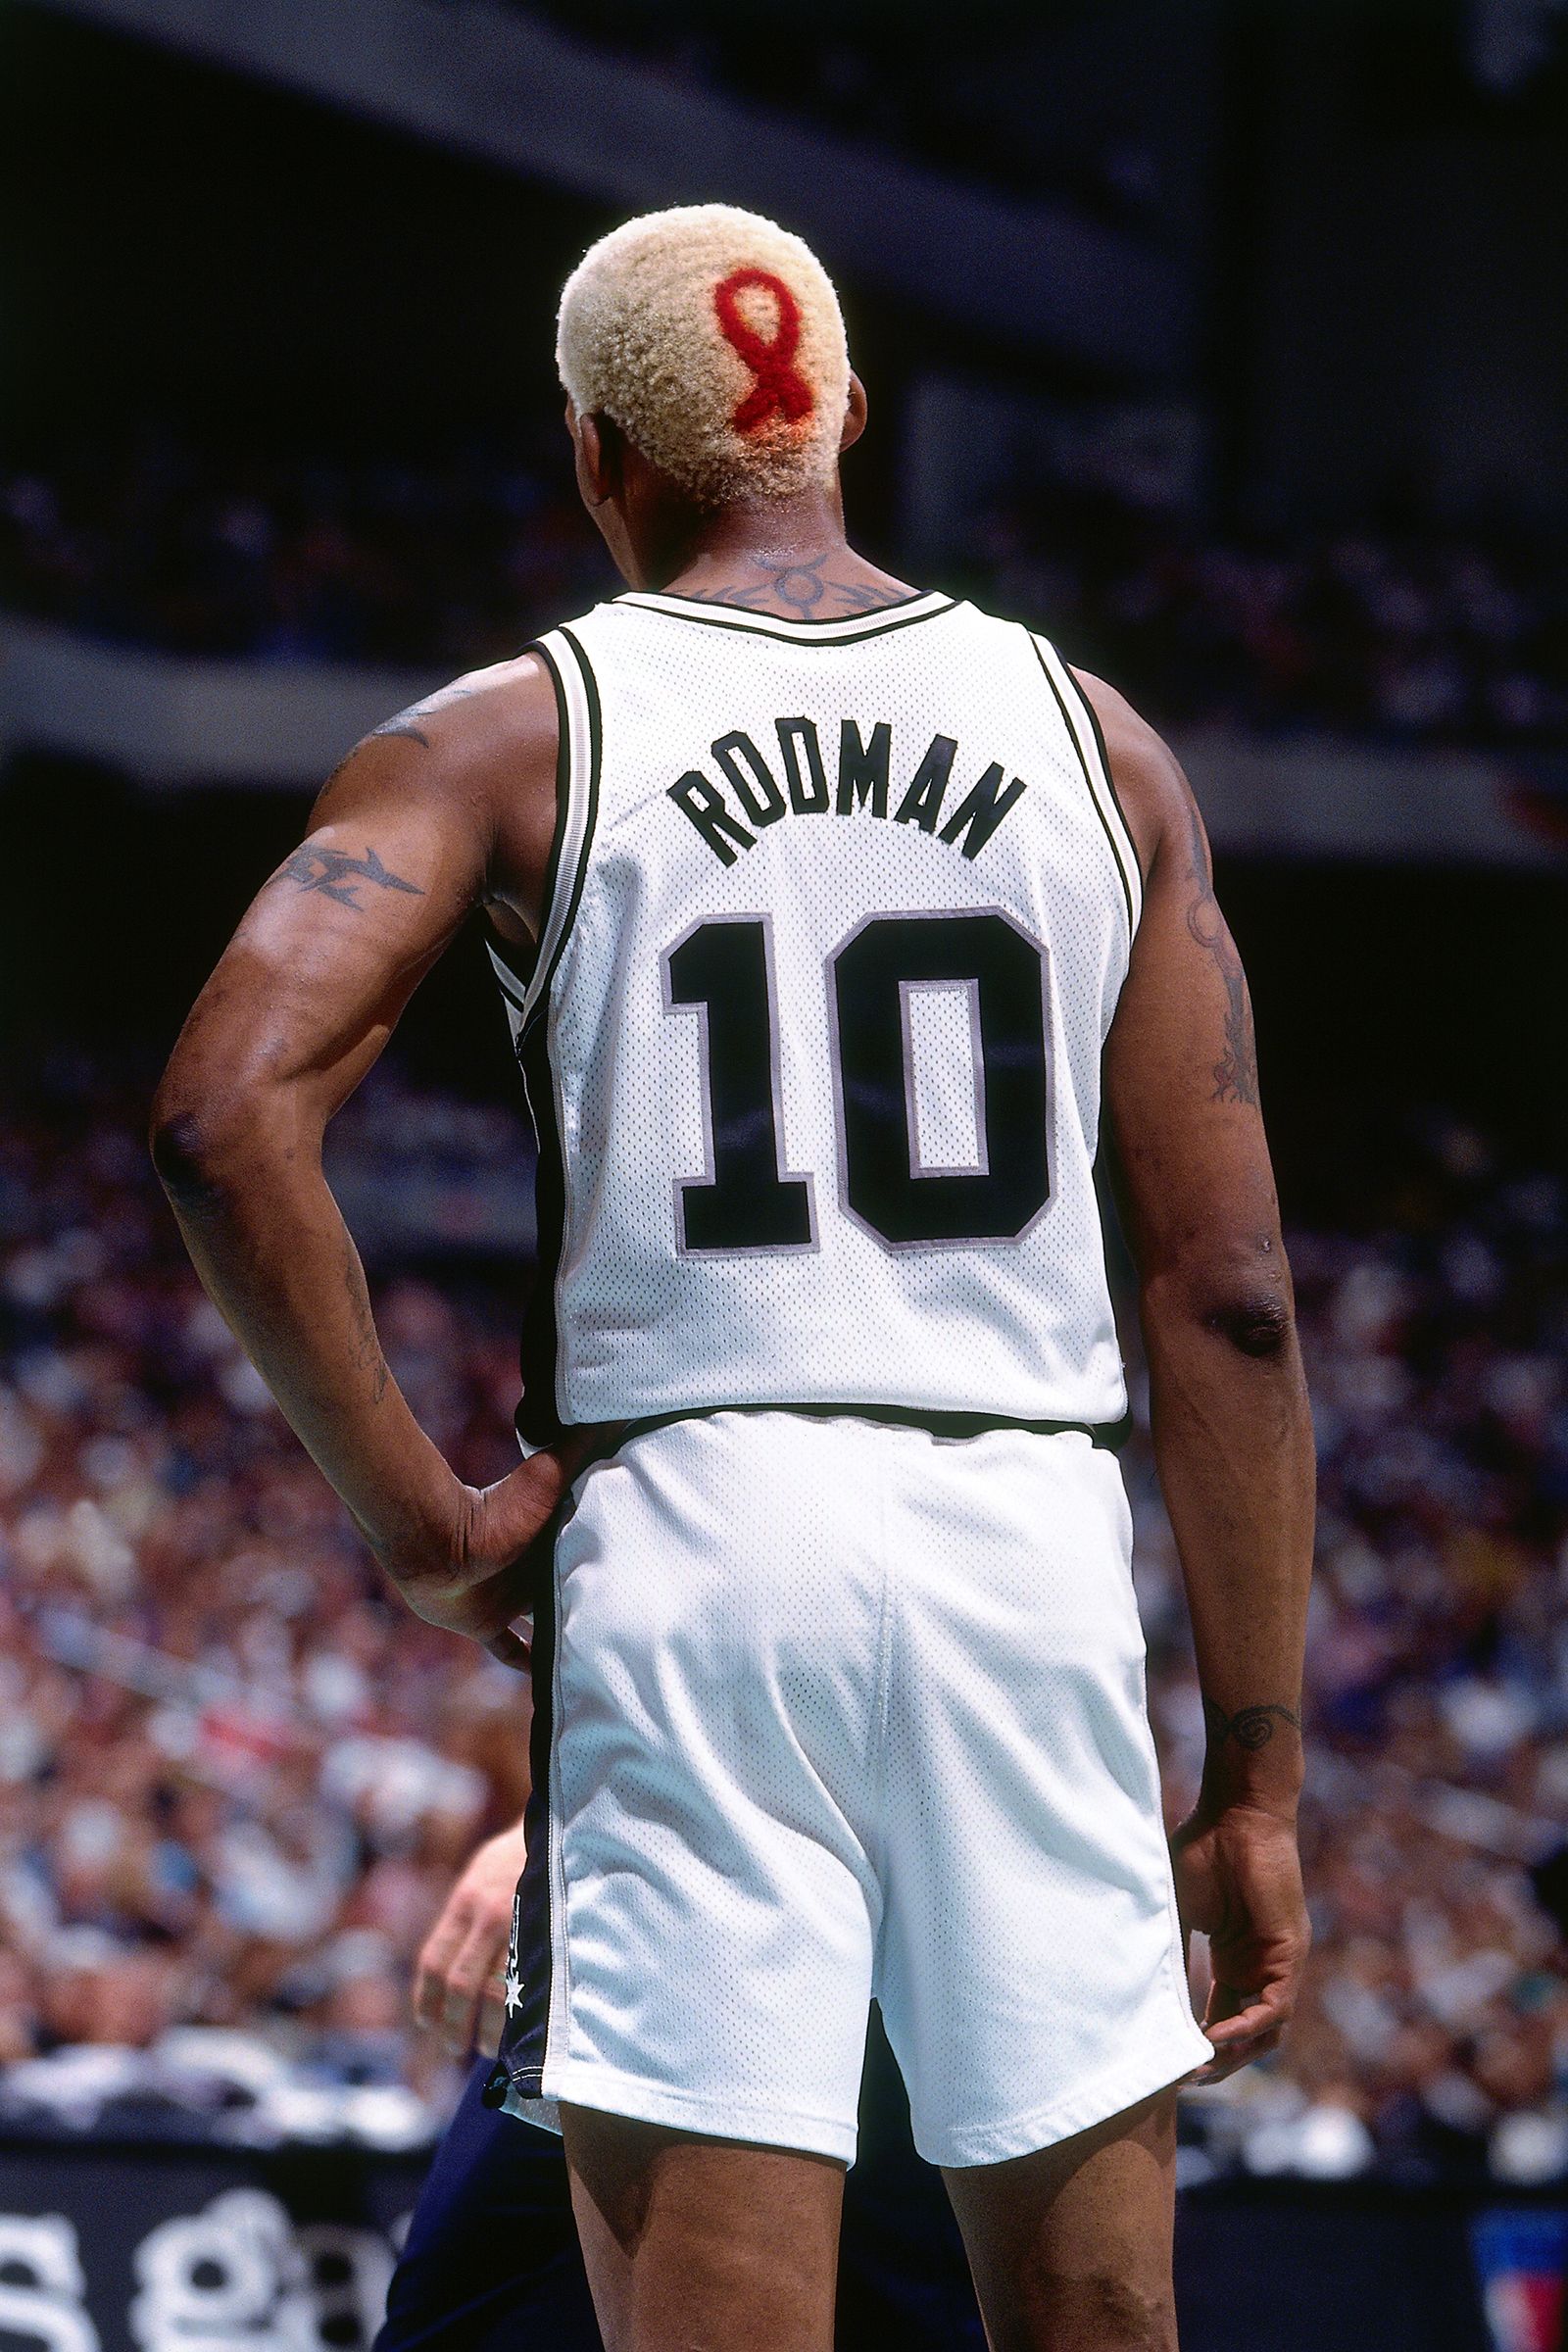 Rodman Spurs Debut - Birth of Demolition Man 